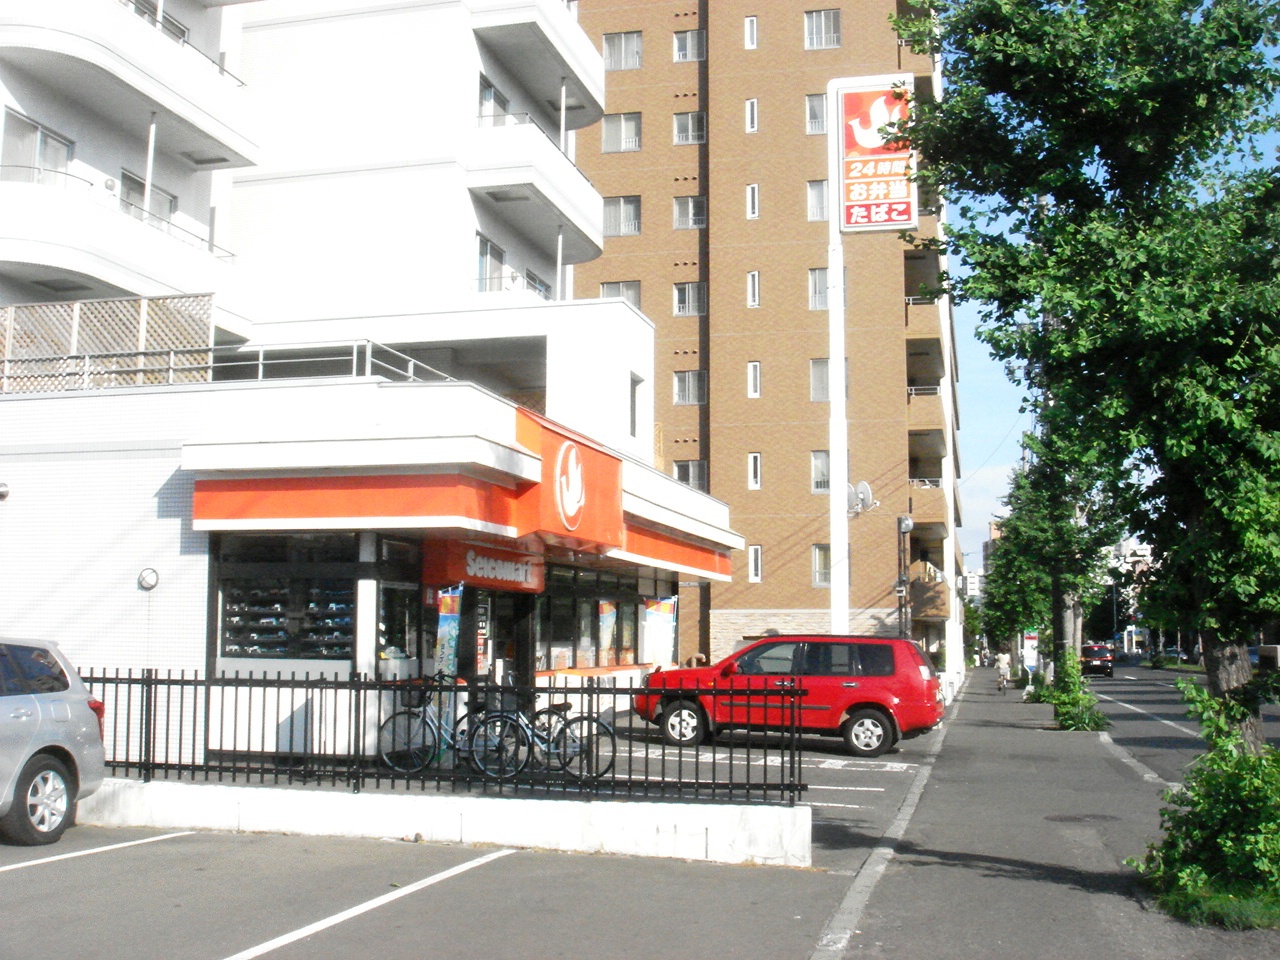 Convenience store. Seicomart Nijuyonken store up (convenience store) 337m